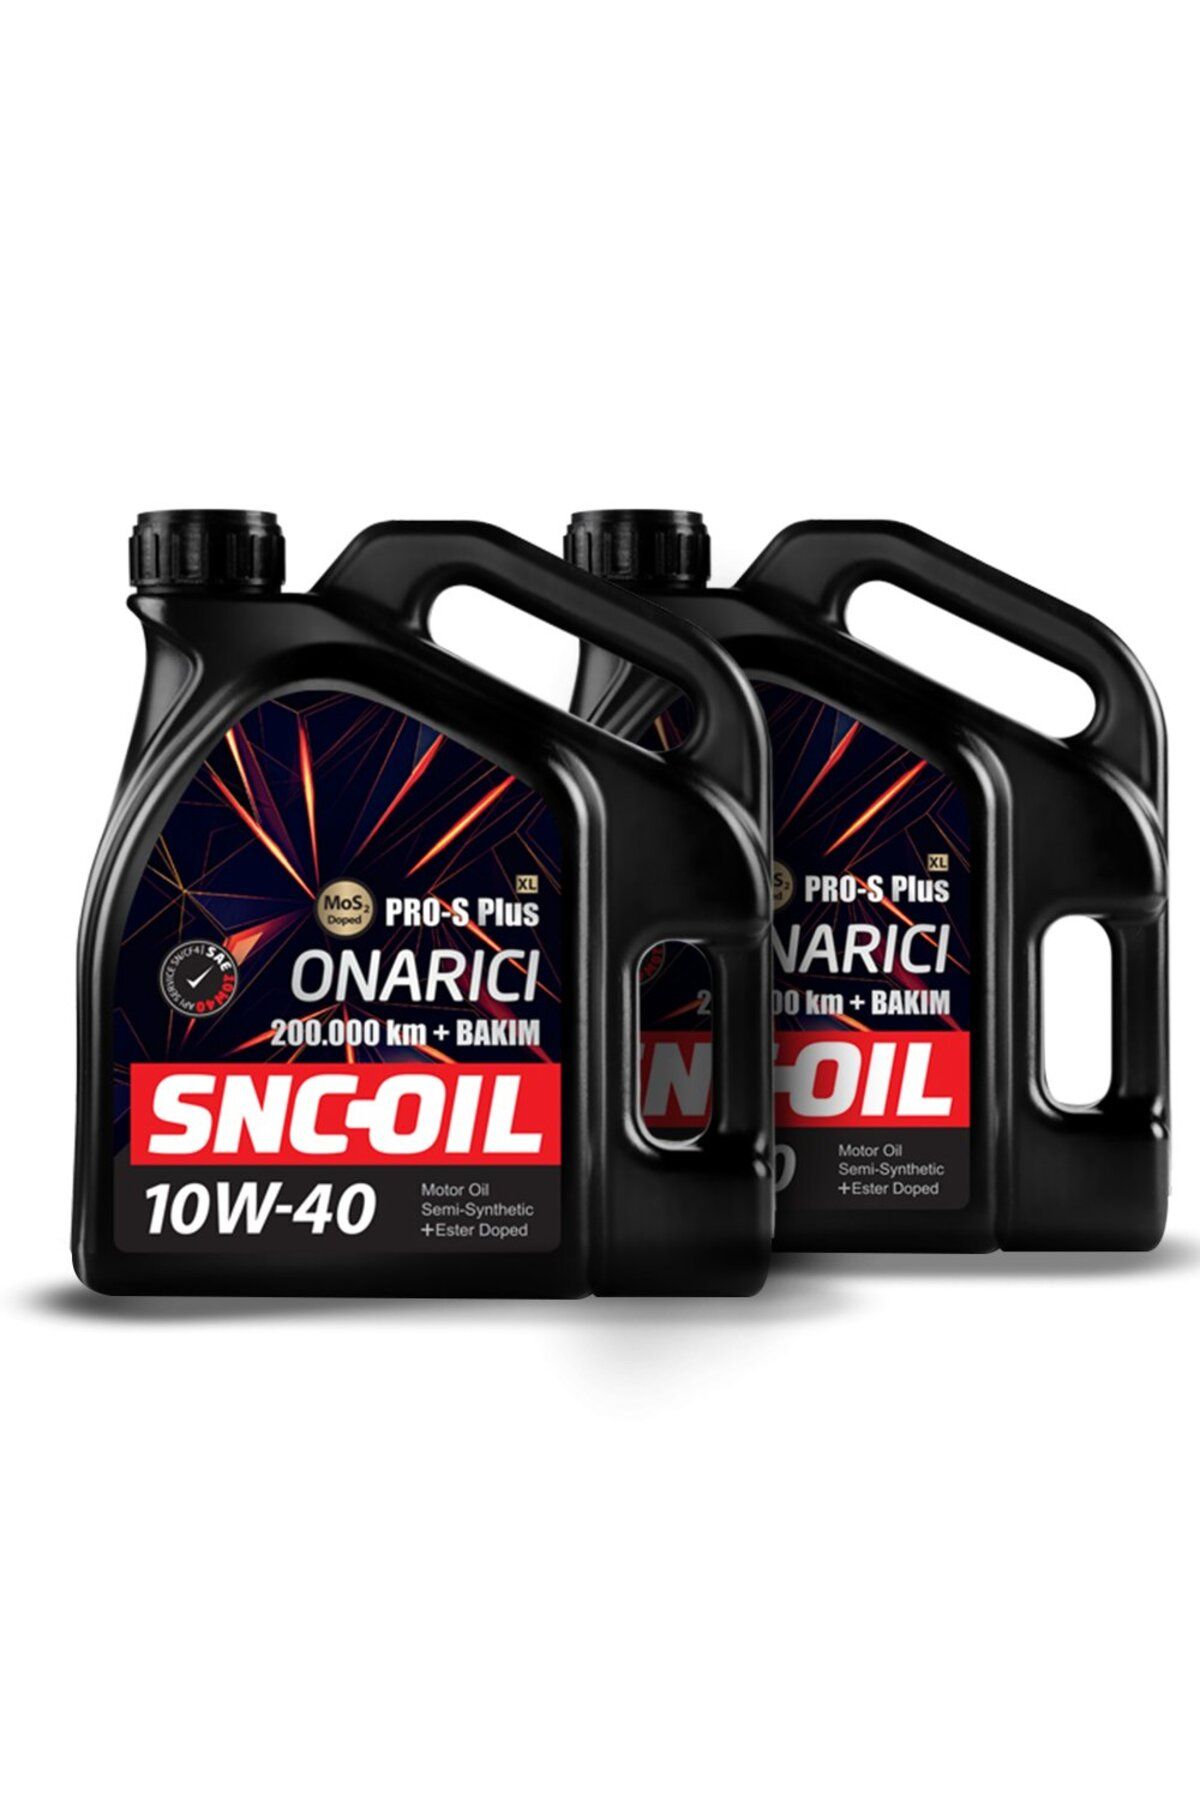 snc Icon Group - SNC-OIL 200.000 + Bakım Pro-S Plus XL Onarıcı 10W-40 Motor Yağı (4+4 Litre)